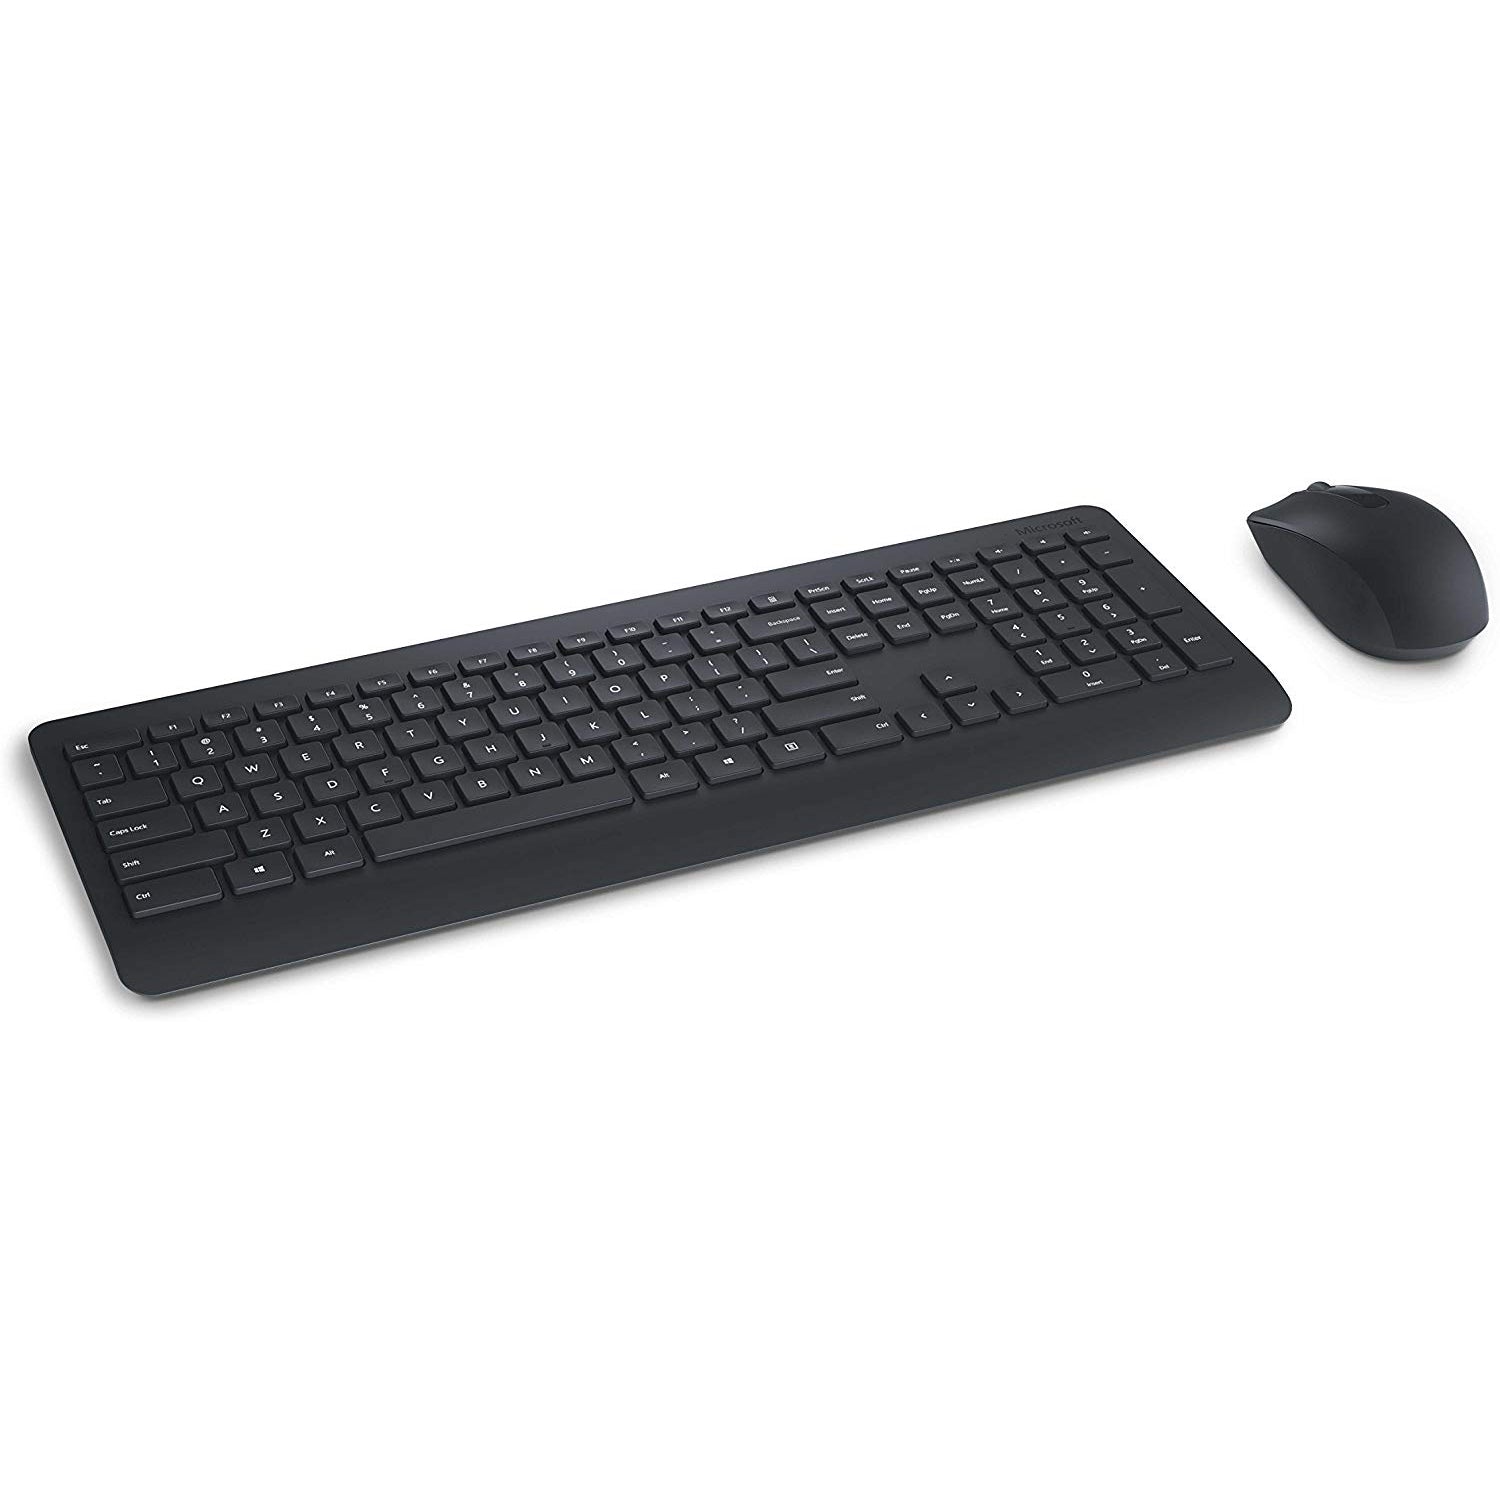 Microsoft Wireless Desktop Keyboard & Mouse 900 USB Port, English and Arabic Keyboard - Black